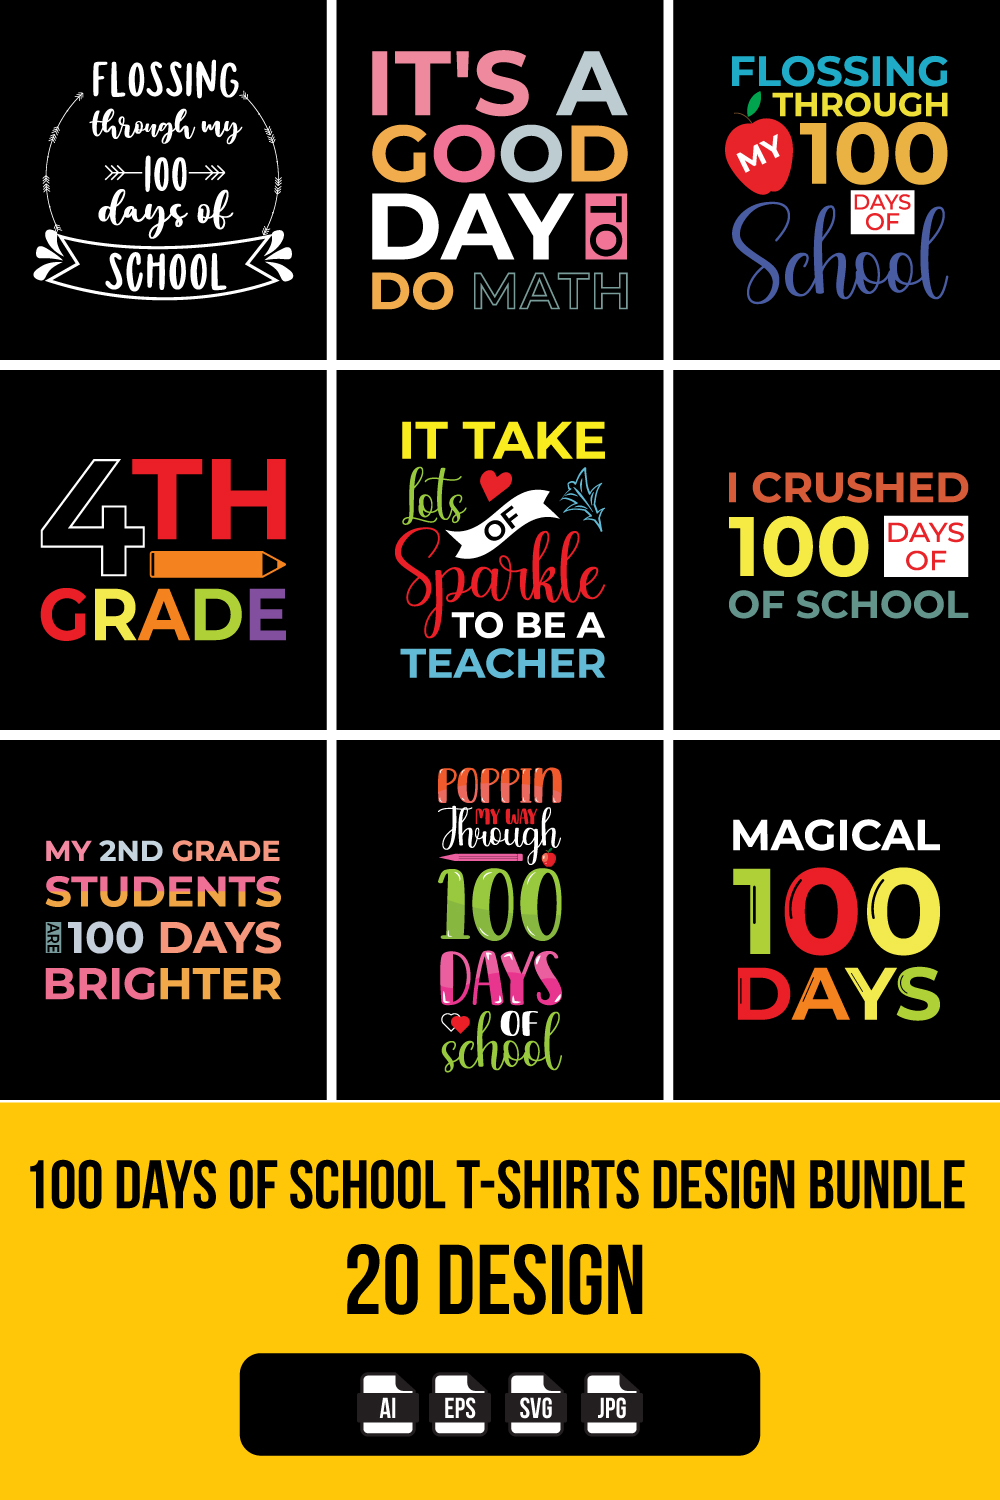 100 Days of School T-Shirts Design Bundle pinterest preview image.